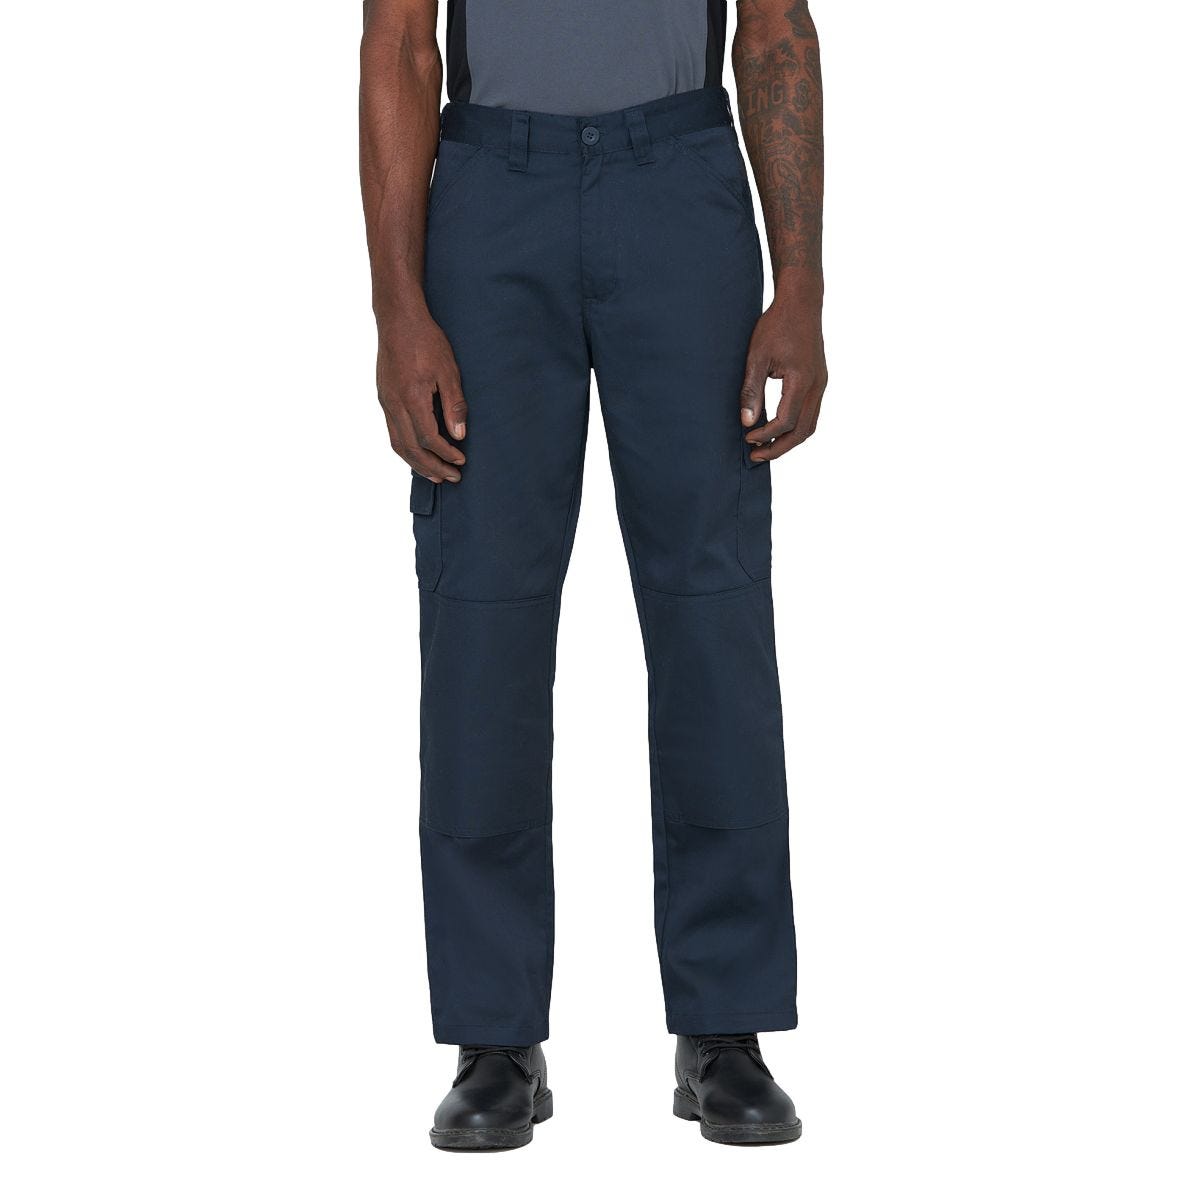 Pantalon Everyday Bleu marine - Dickies - Taille 44 2